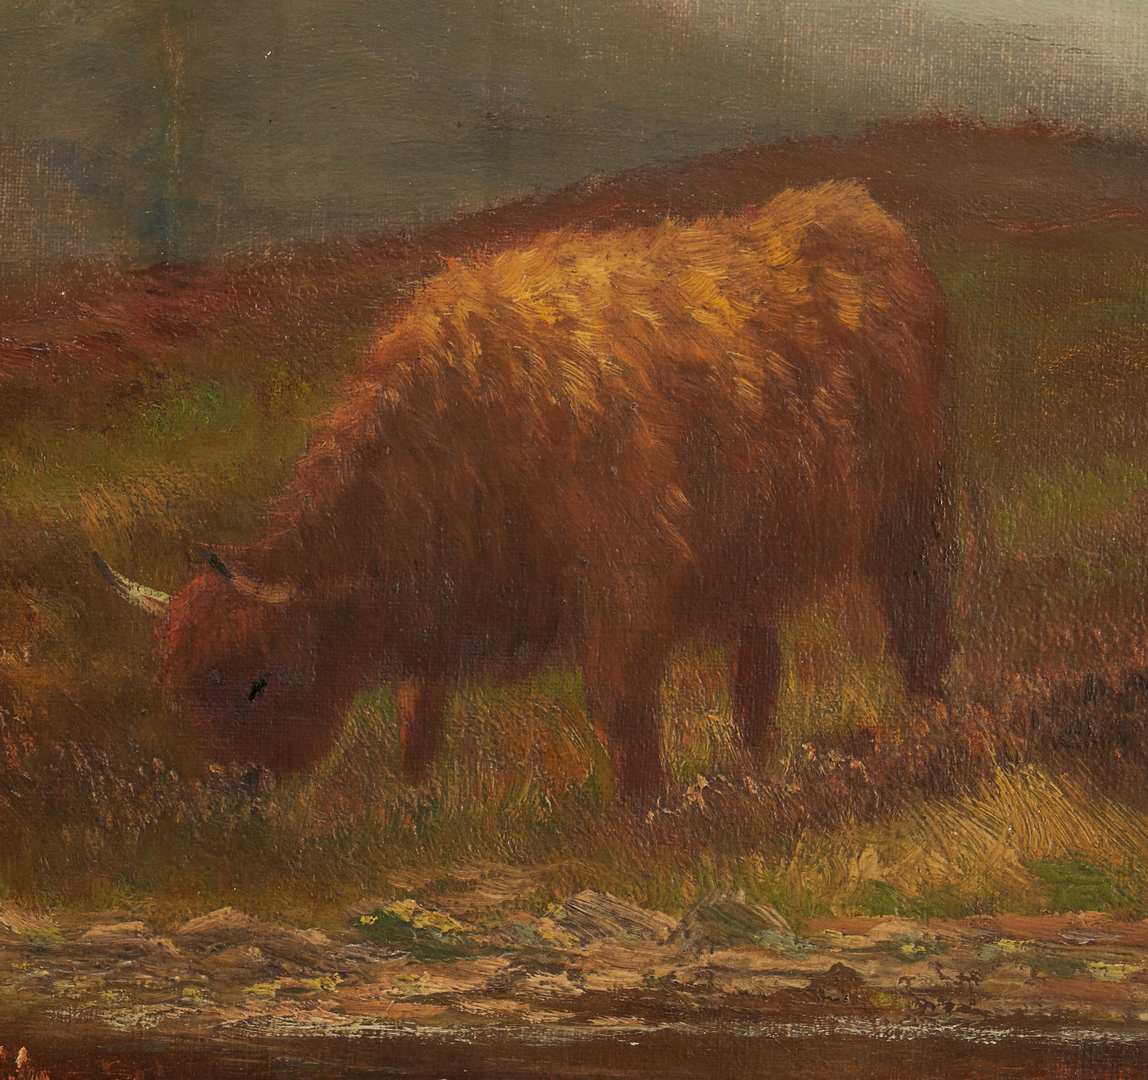 Lot 65: Daniel Sherrin the Elder O/C, Highland Cattle